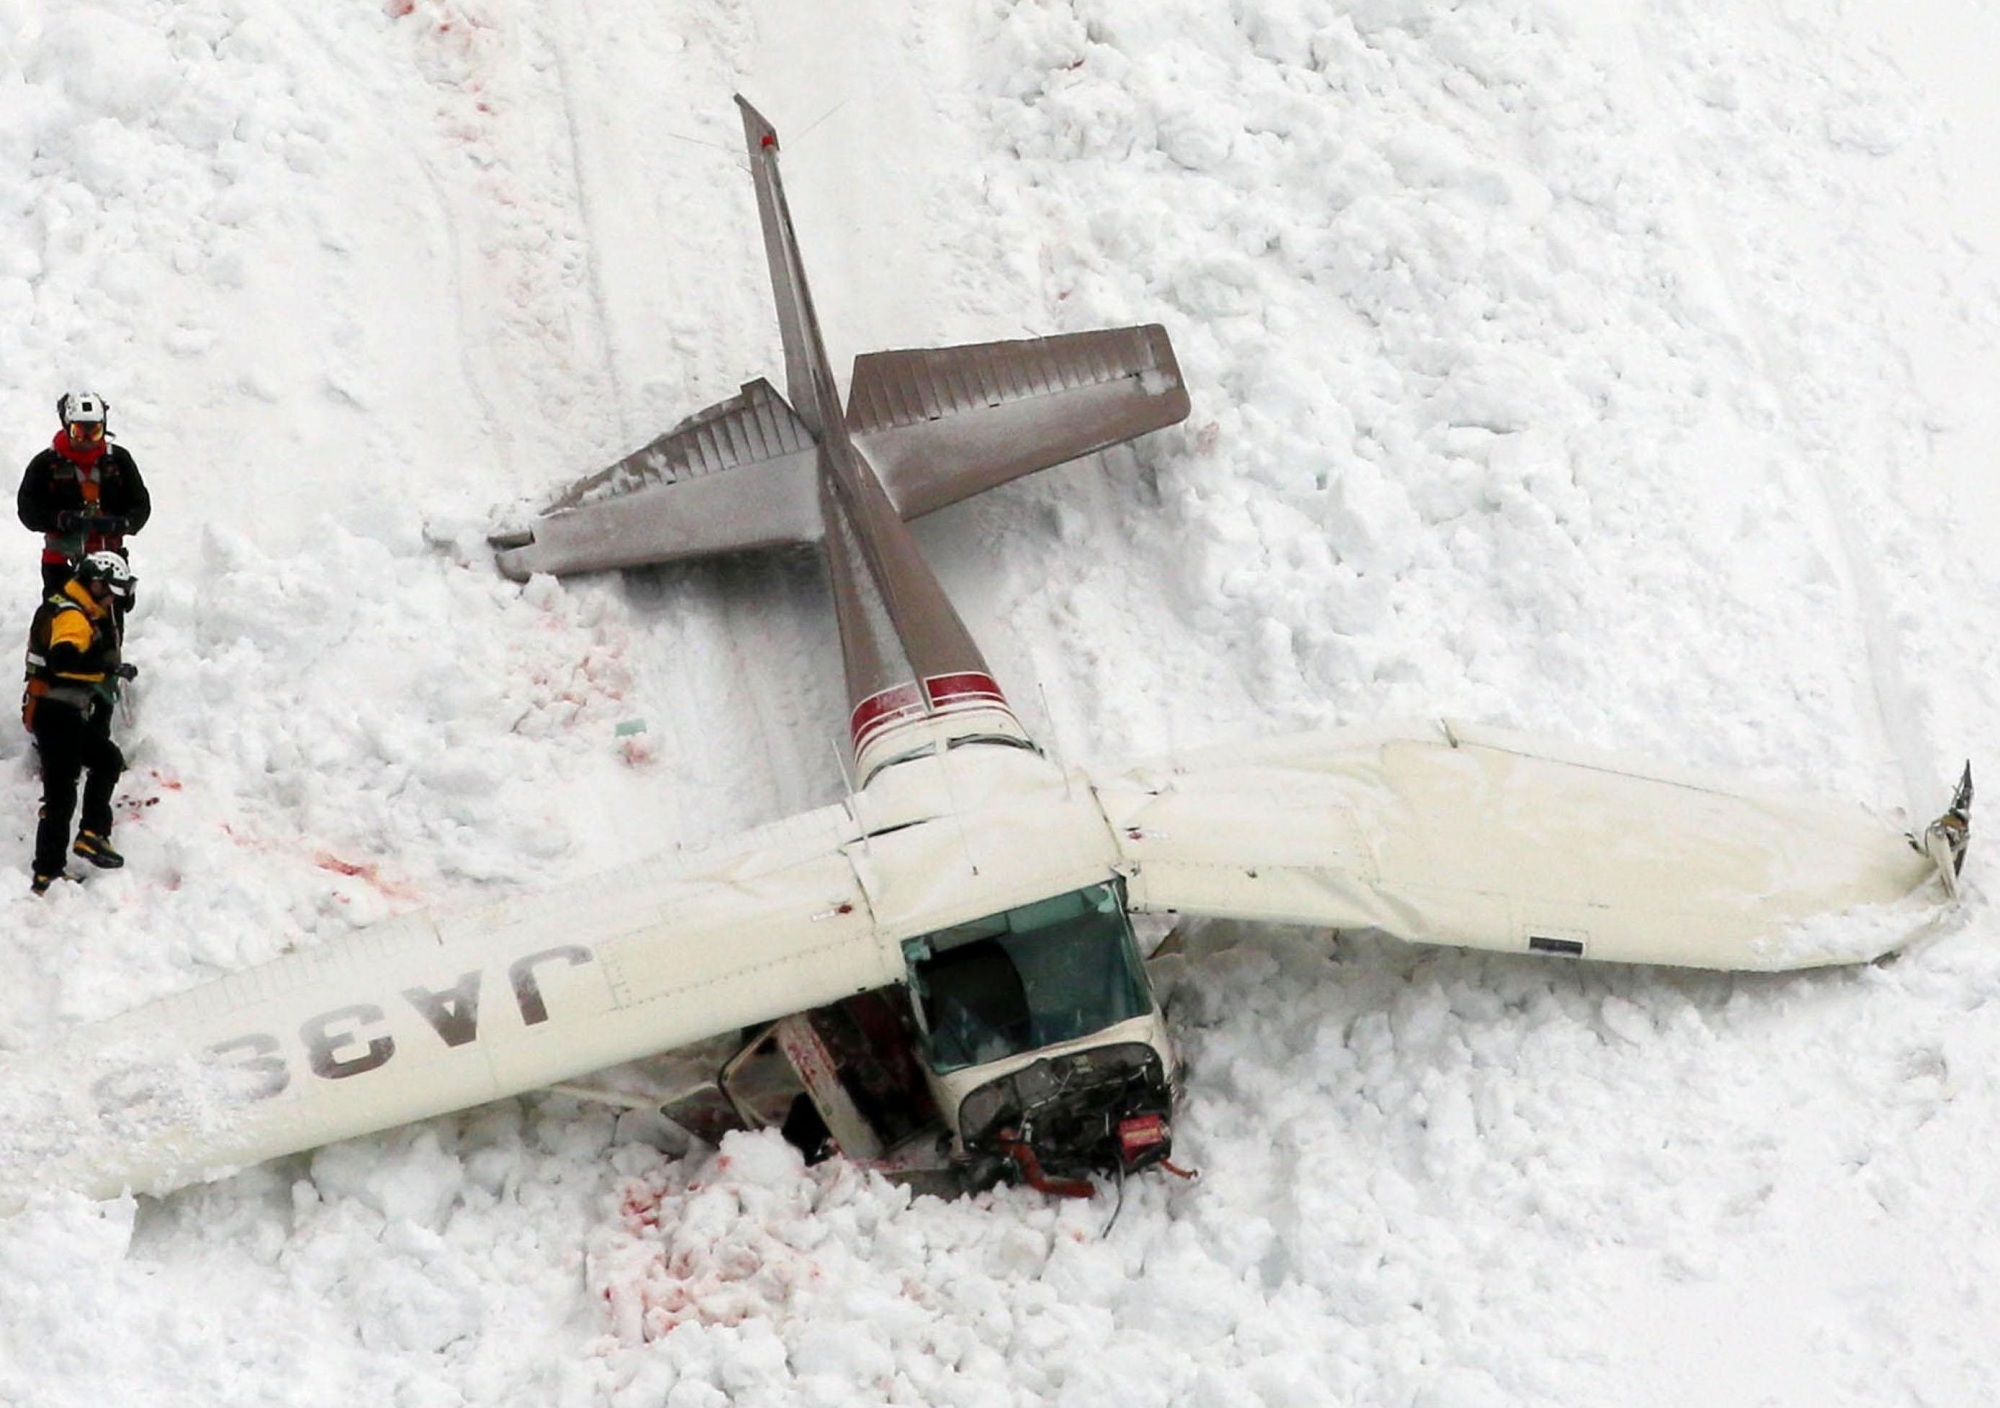 Image result for plane crash in snow